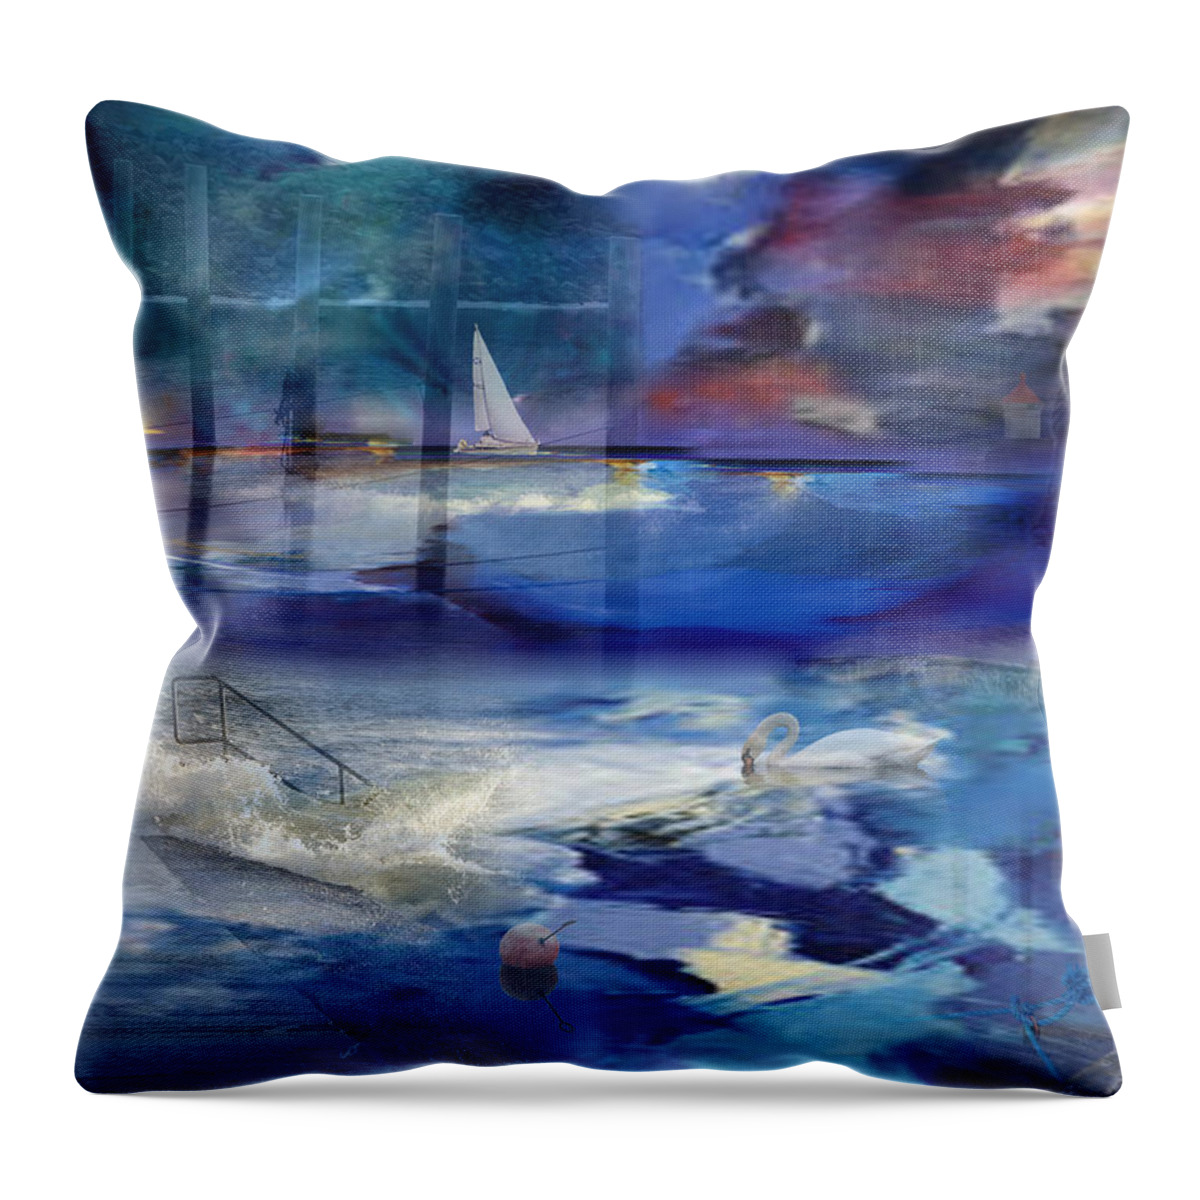 Maritime Throw Pillow featuring the digital art Maritime Fantasy by Randi Grace Nilsberg